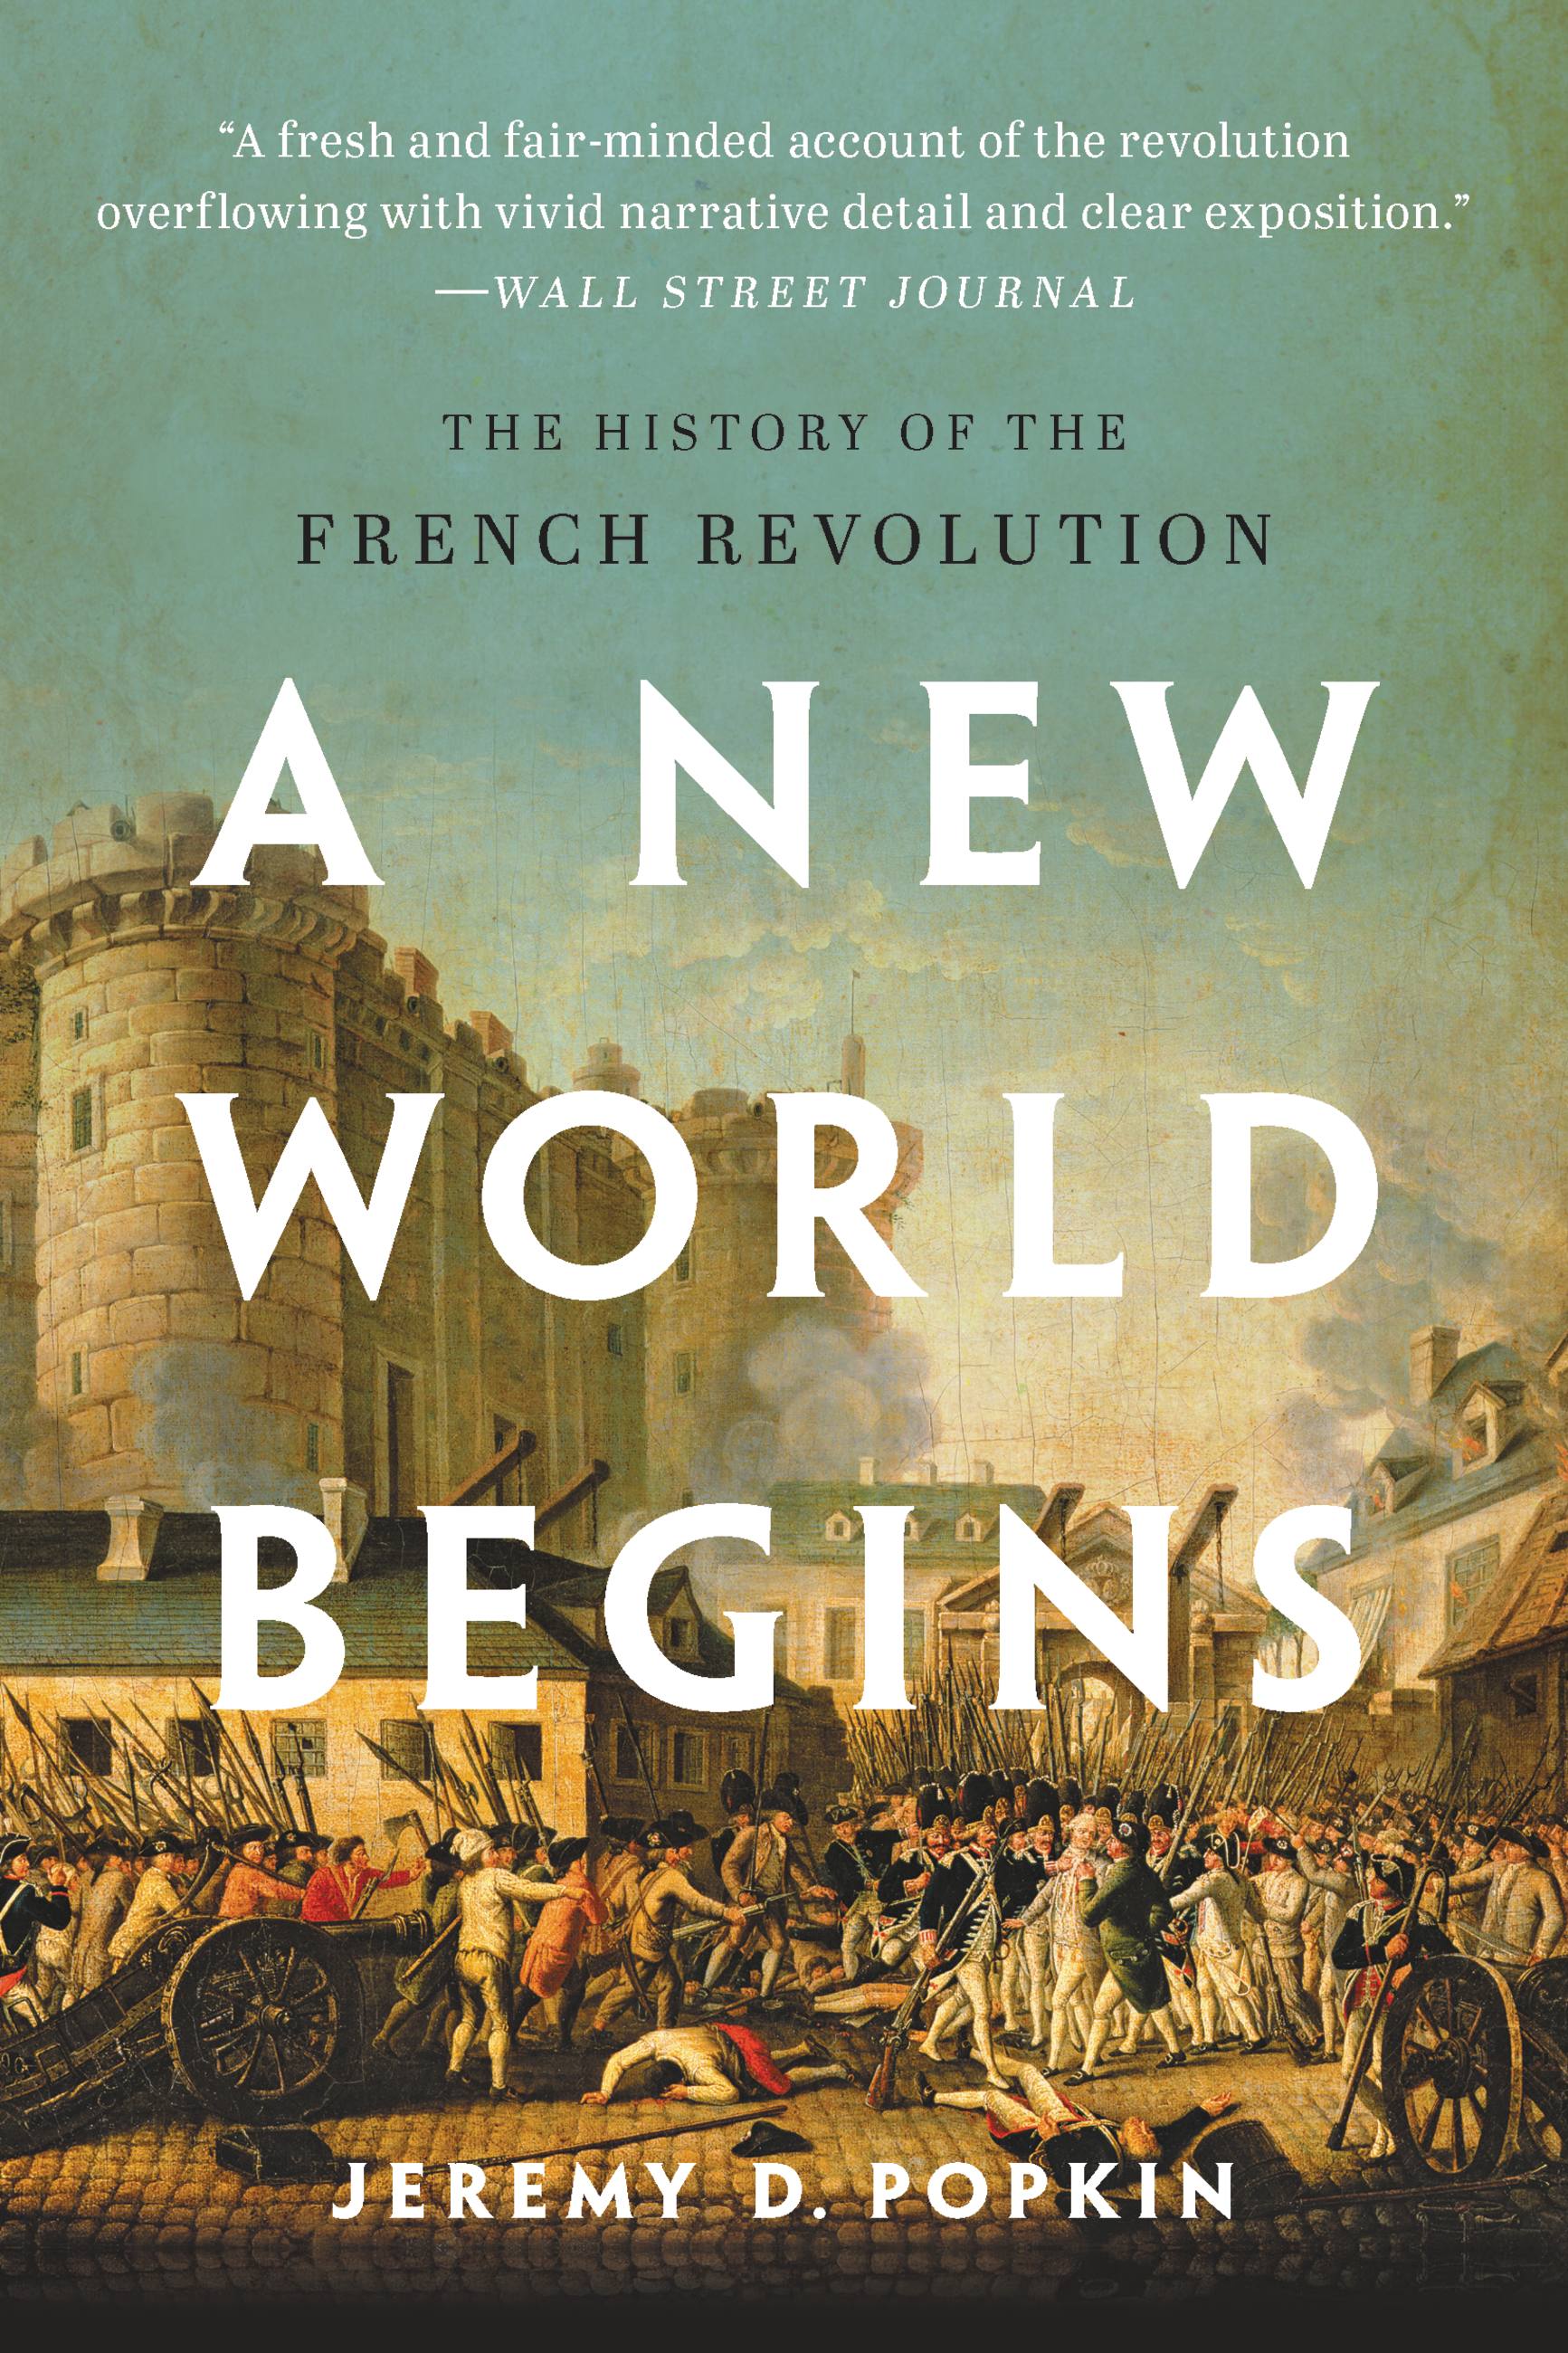 A New World Begins by Jeremy Popkin | Hachette Book Group